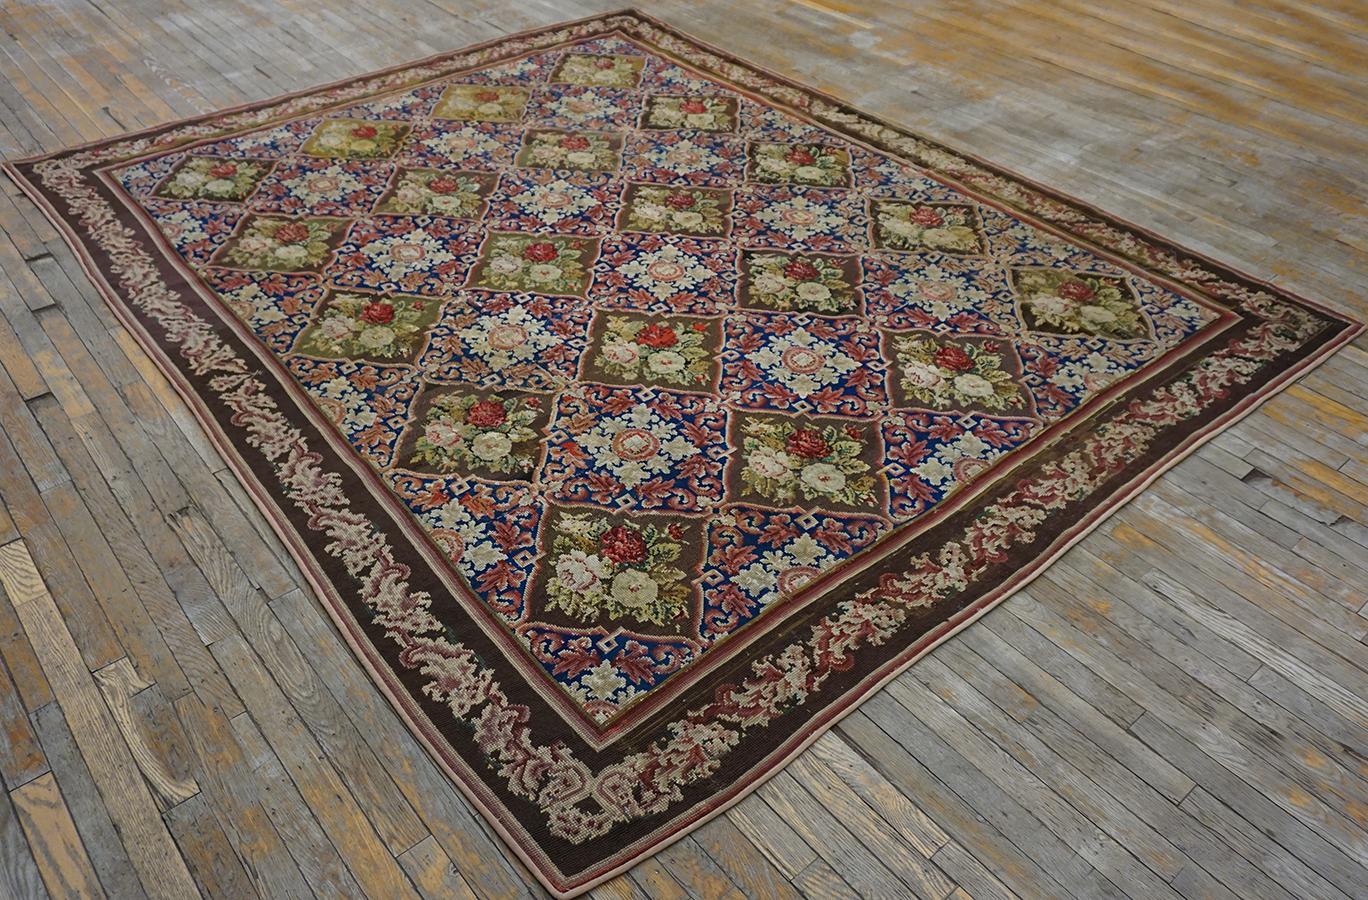 Hand-Woven 19th Century English Needlepoint Carpet ( 7'6